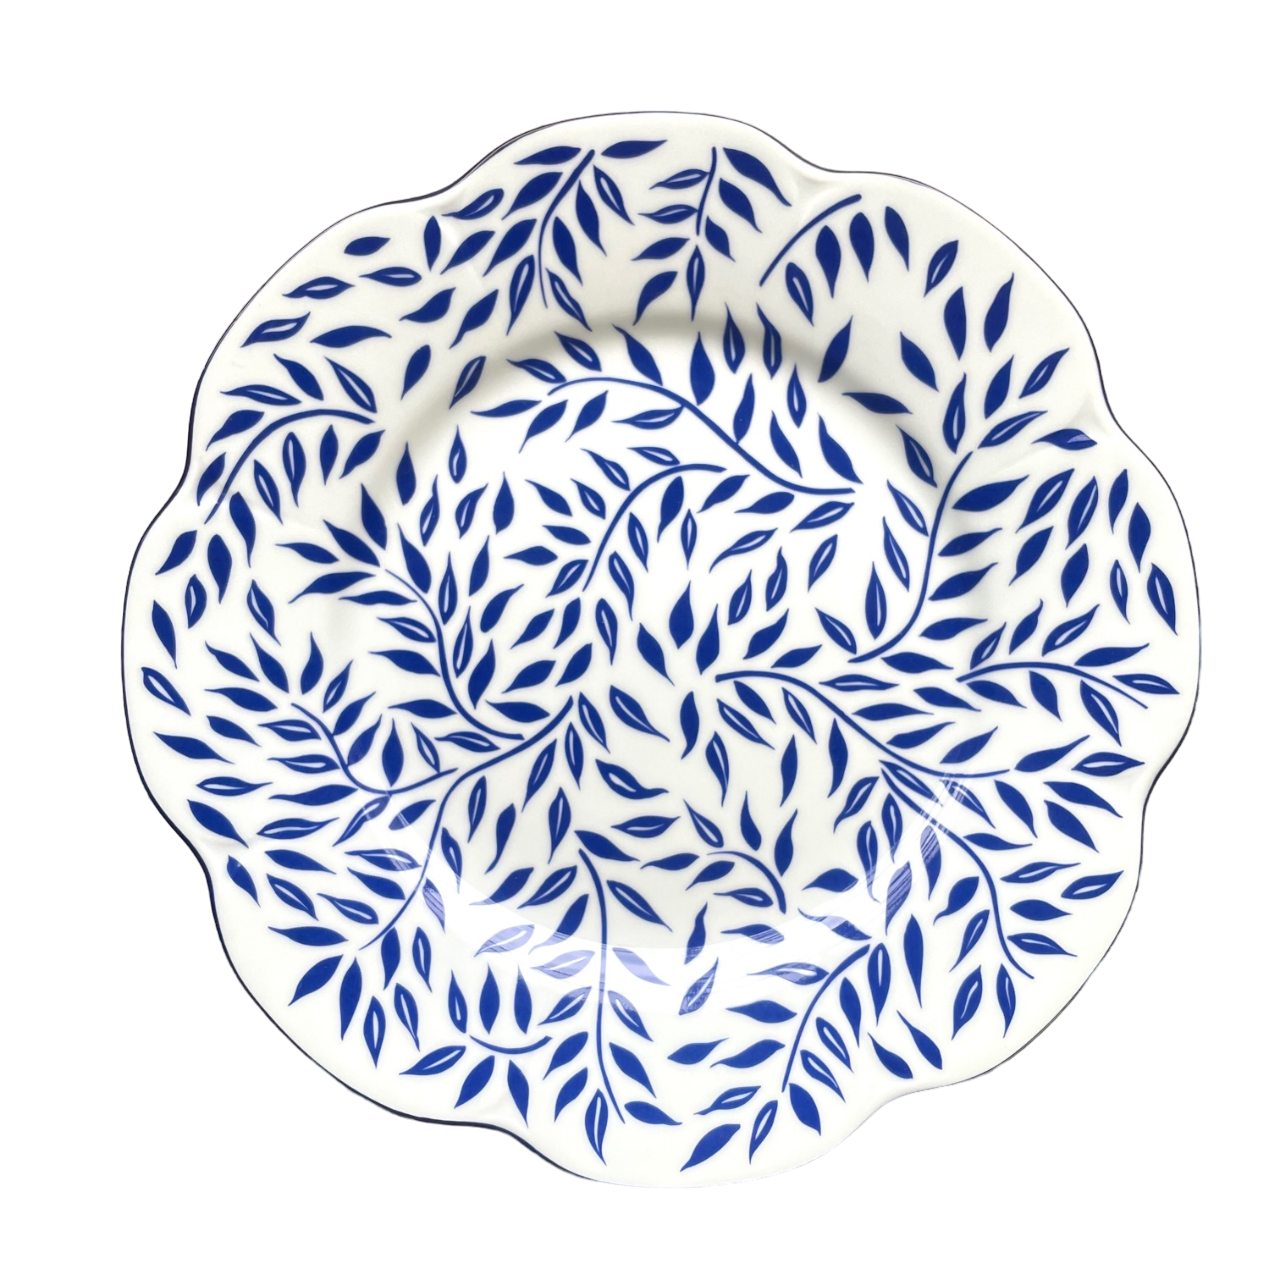 Olivier bleu - Assiette plate 27.5 cm